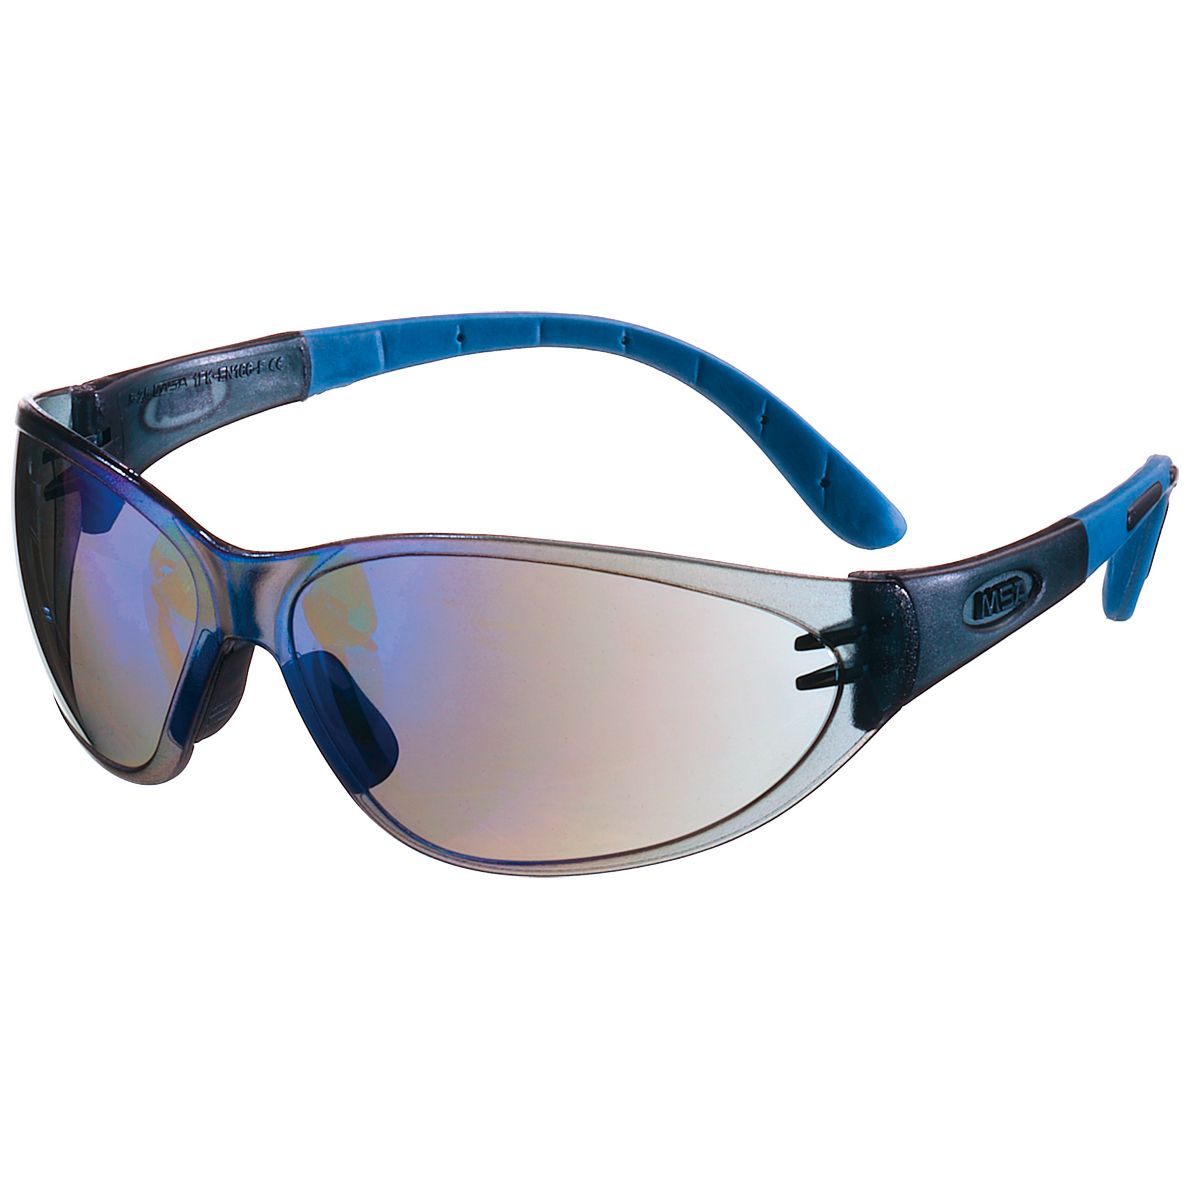 MSA Perspecta 9000 Schutzbrille - kratz- & beschlagfest dank Sightgard-Beschichtung - EN 166/172 - Blau/Blauspiegel